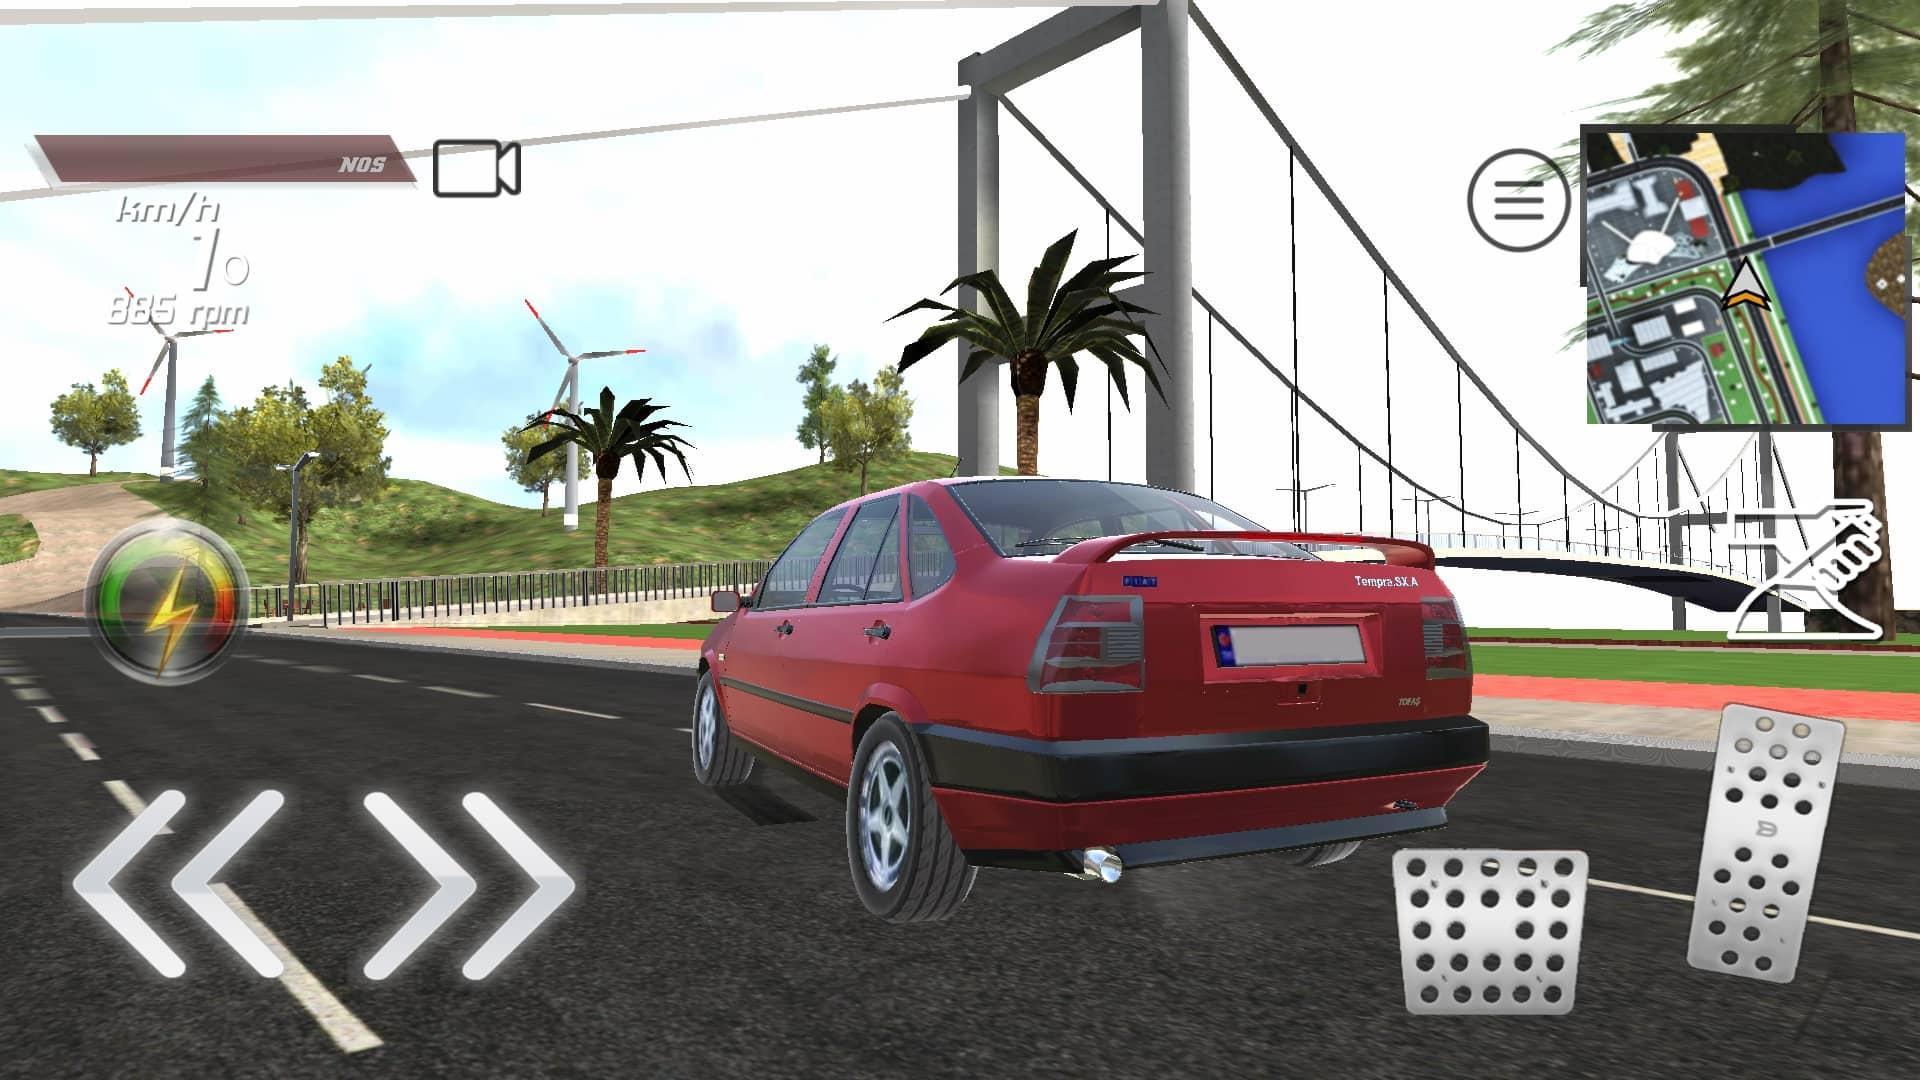 Tempra - City Simulation, Quests and Parking 1.7 Screenshot 10